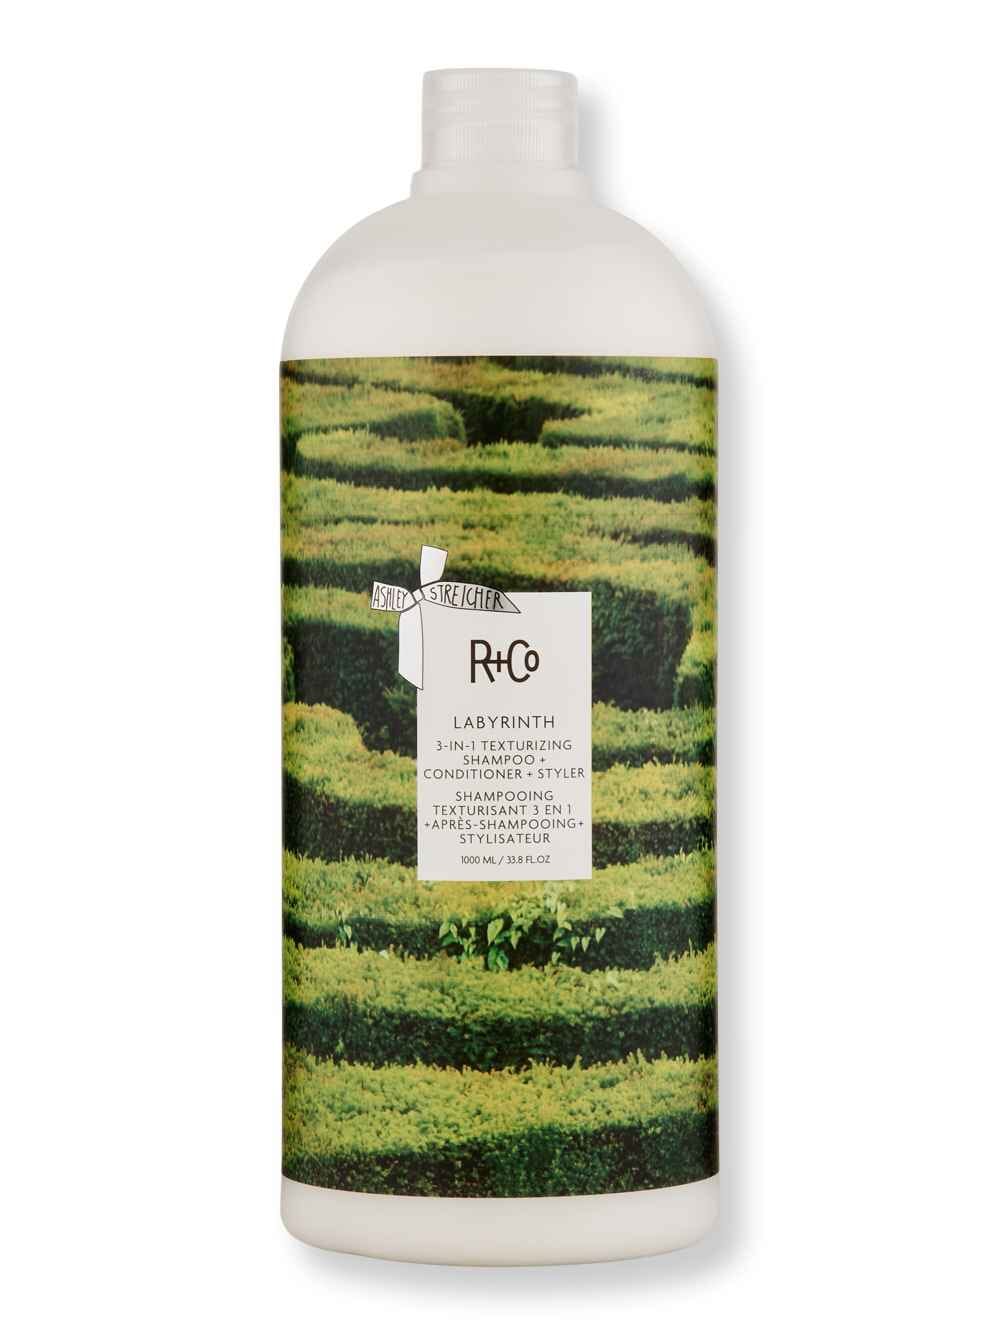 R+Co R+Co Labyrinth 3-in-1 Texturizing Shampoo + Conditioner + Styler 33.8 oz Shampoos 